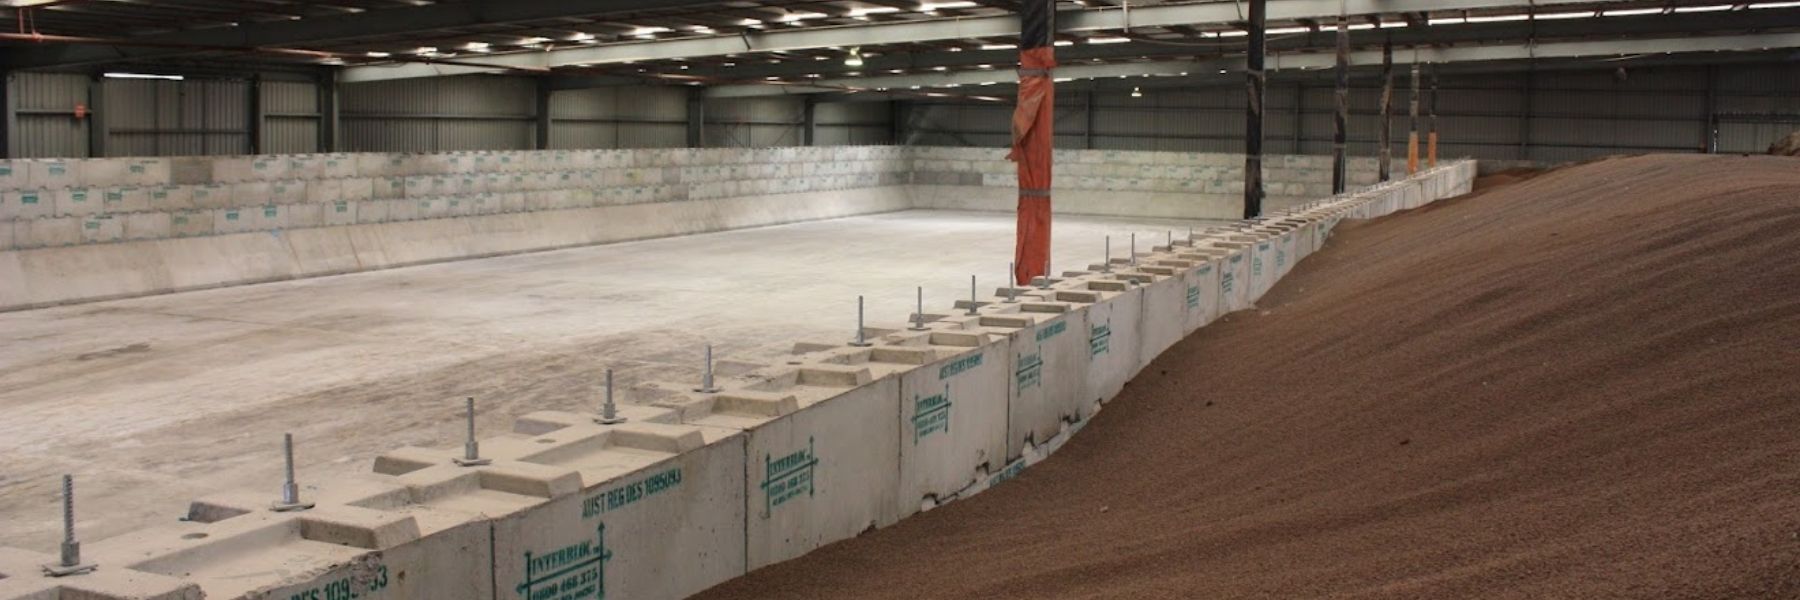 Interbloc concrete blocks forming bulk fertiliser bunkers